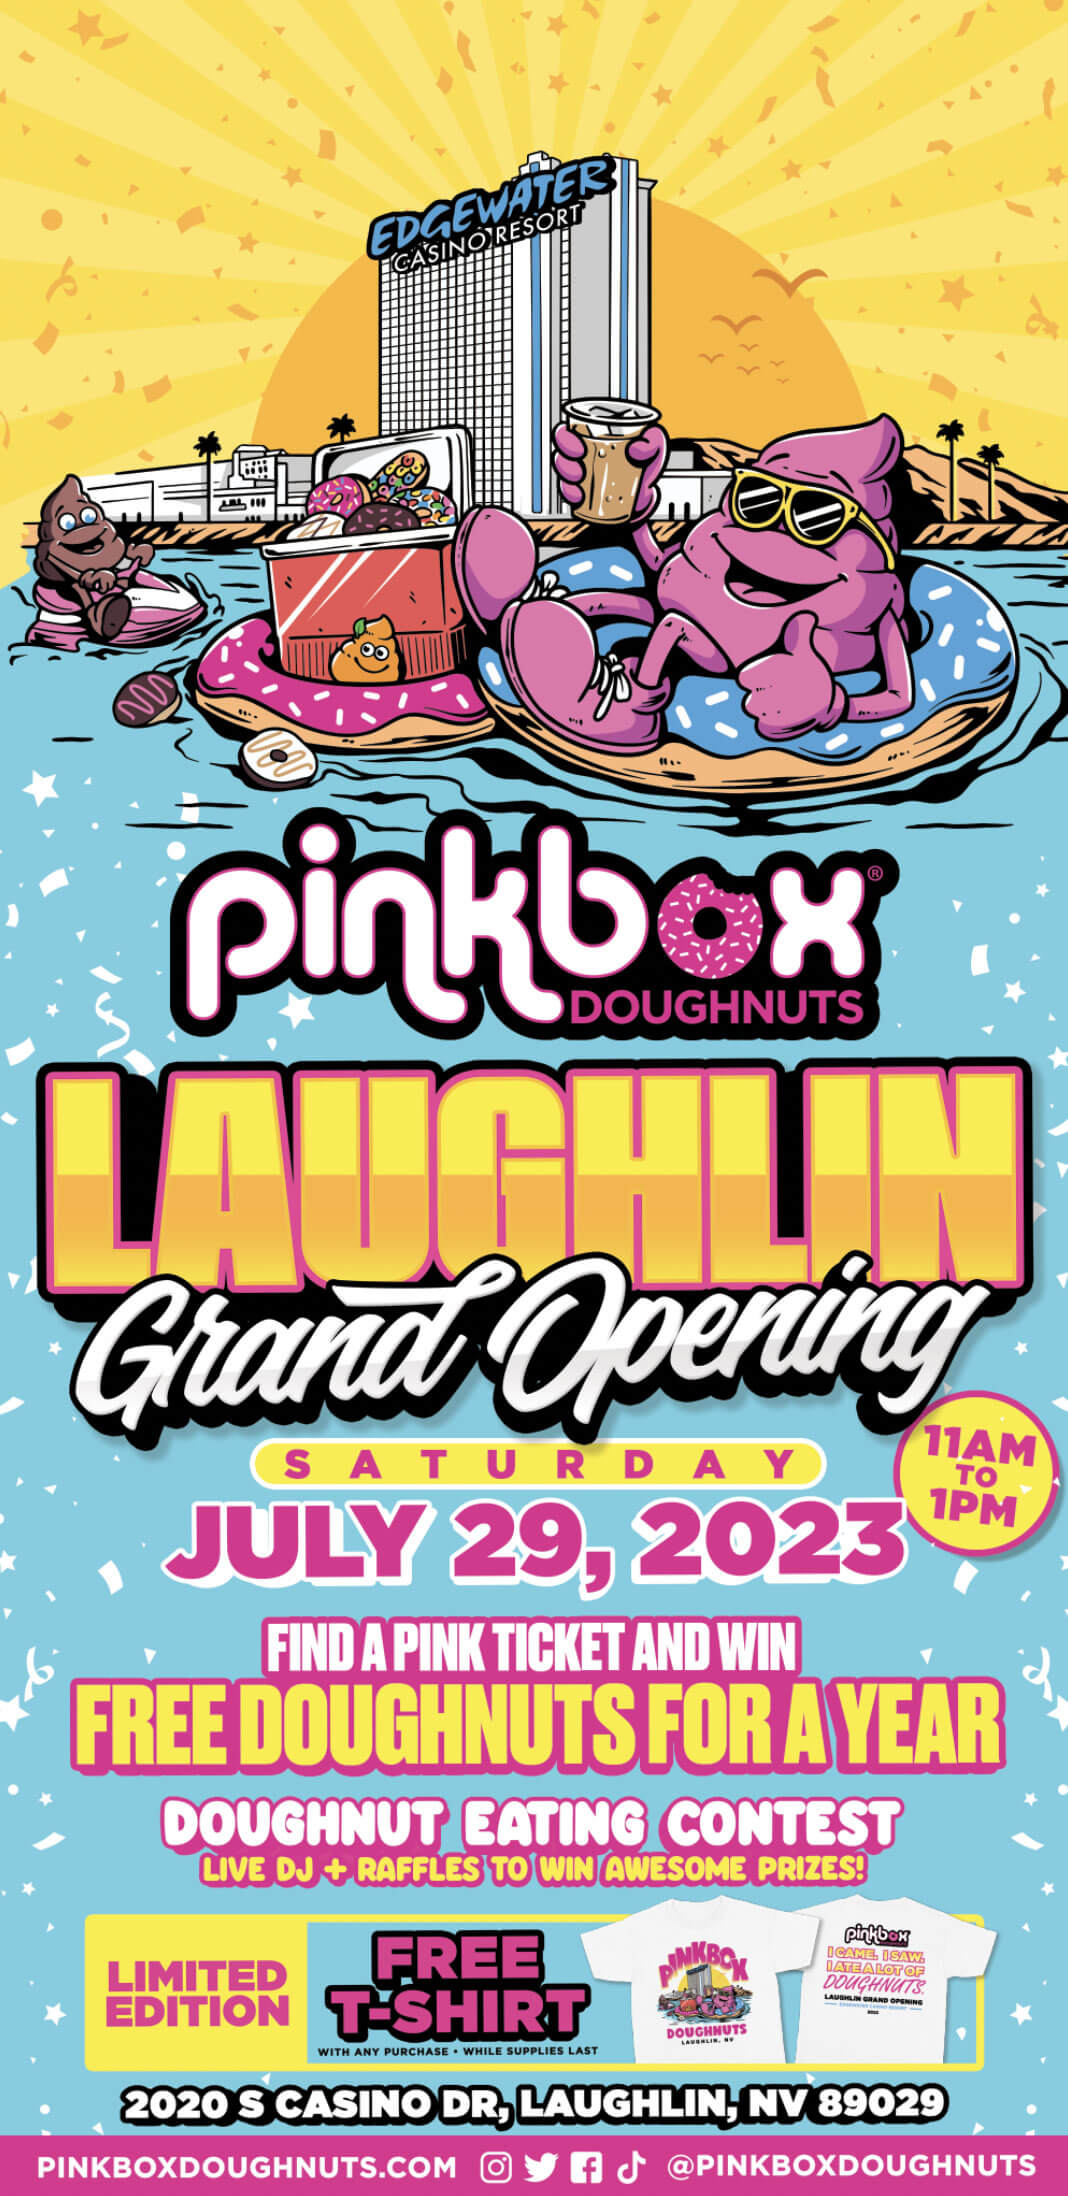 Pinkbox Doughnuts Grand Opening